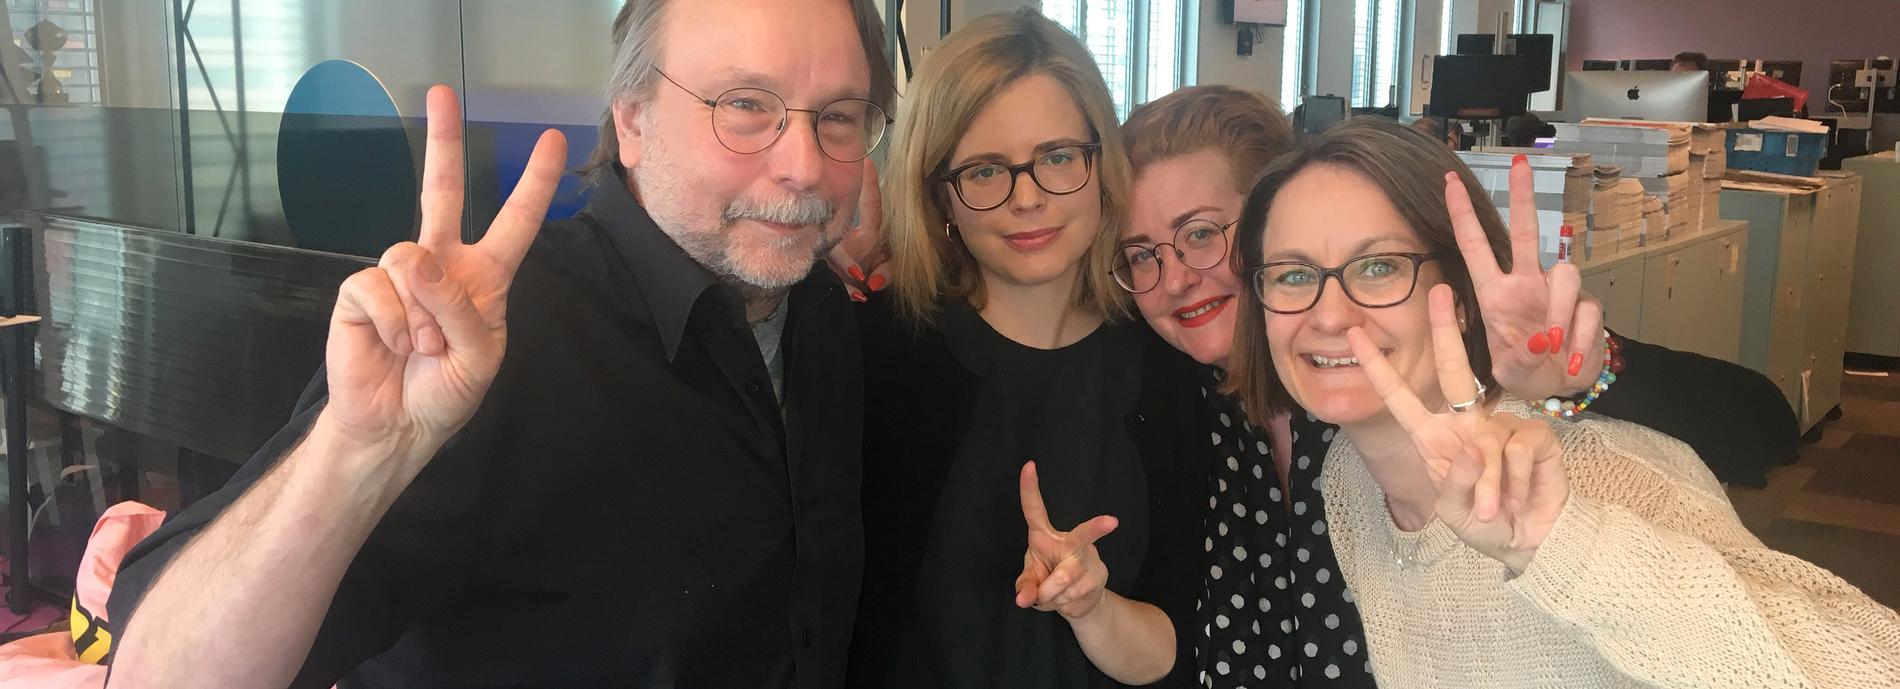 Fredstecken med Ingvar Persson, Jonna Sima, Ulrica Schenström och programledare Anna Andersson.